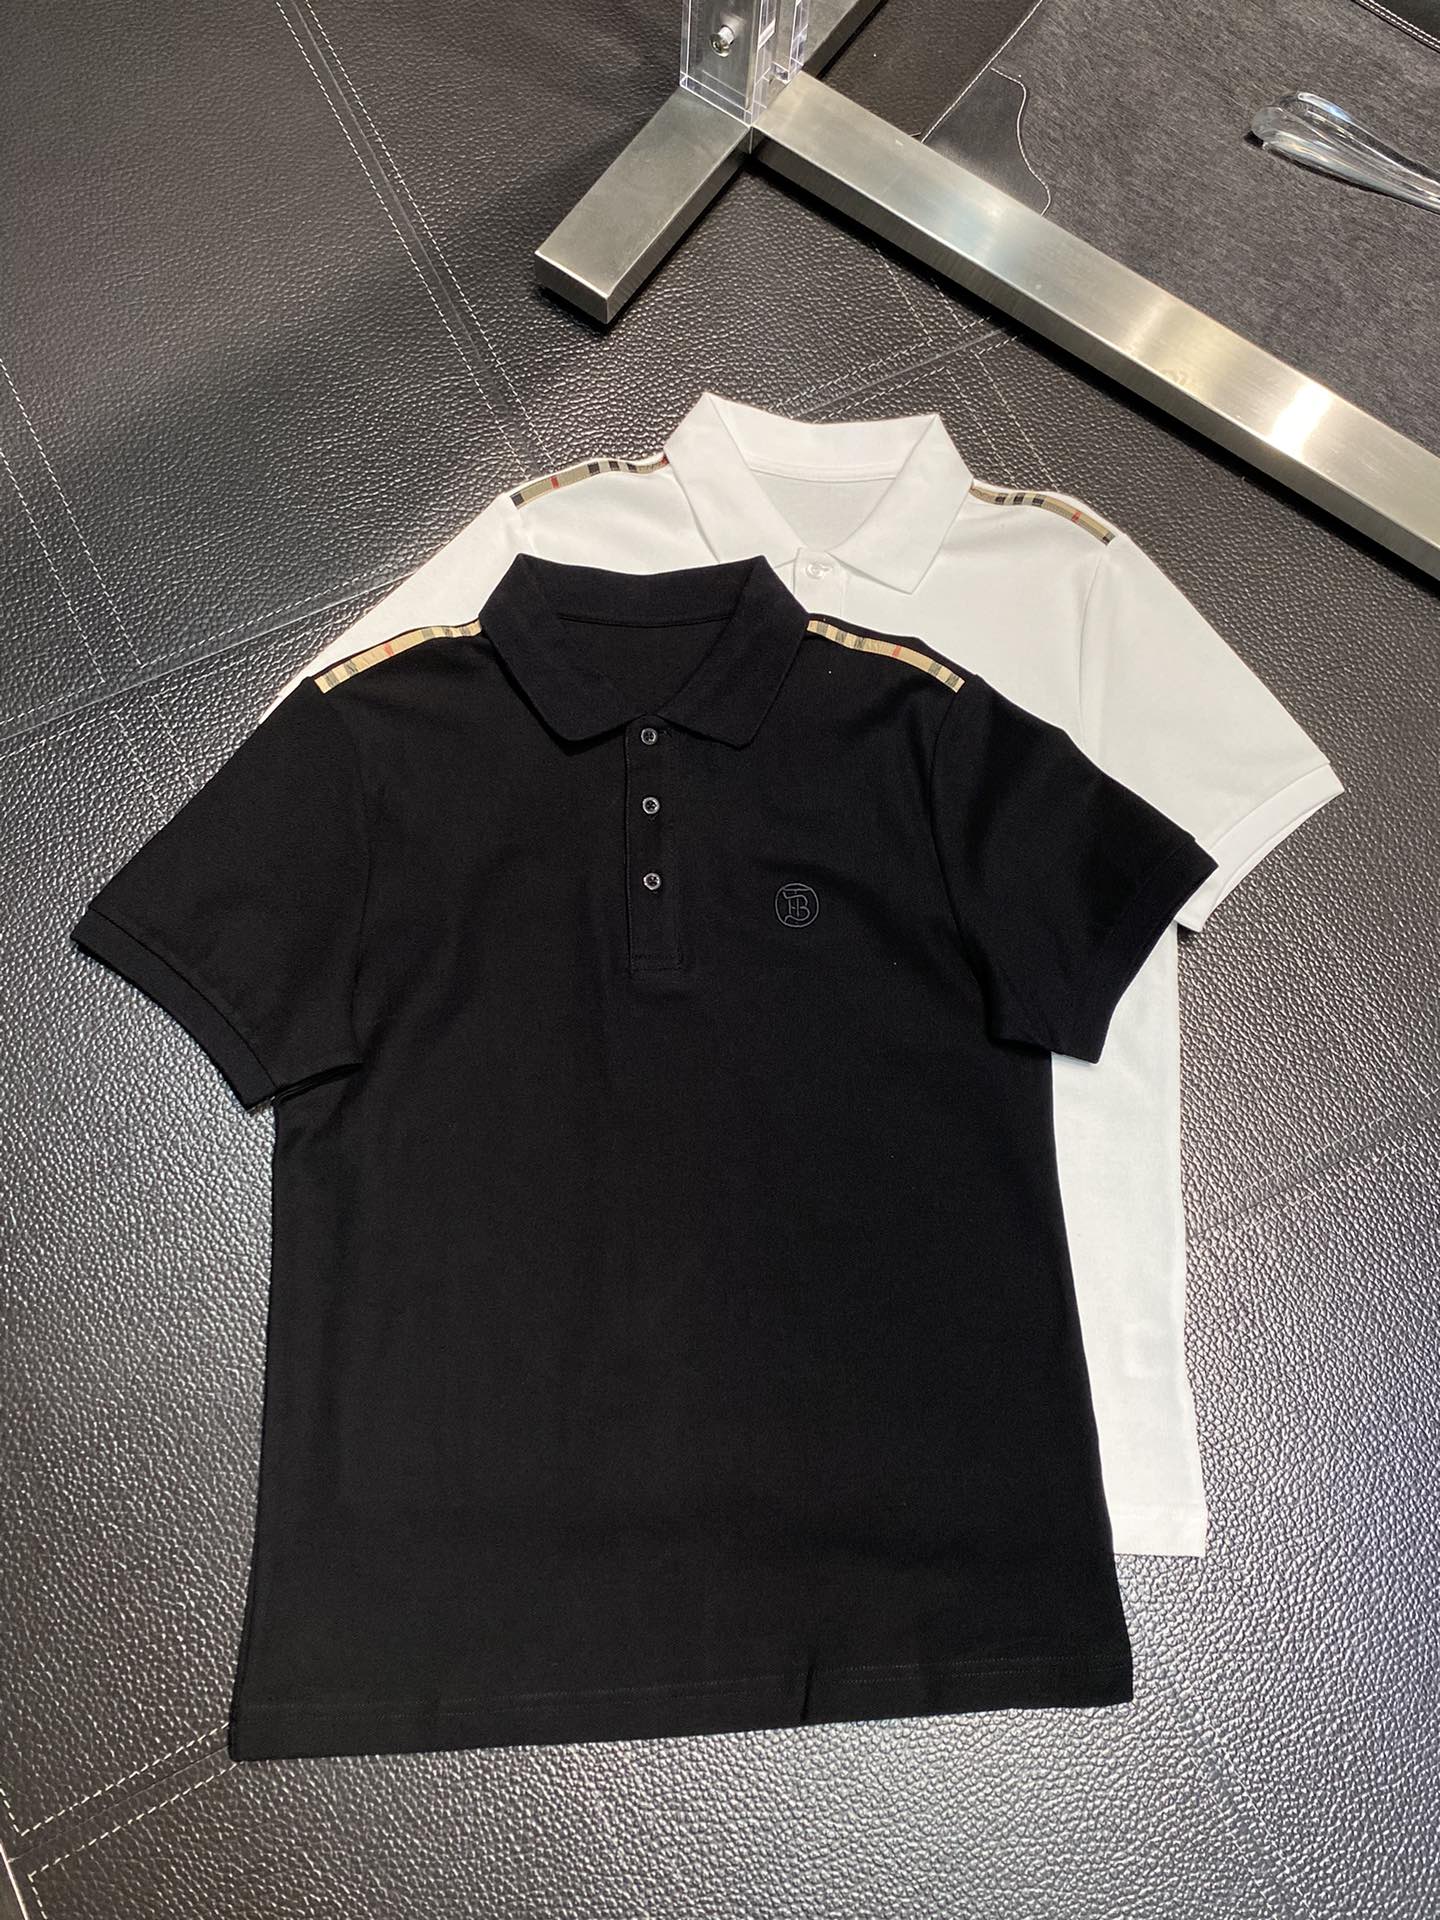 Burberry Clothing Polo T-Shirt Men Fashion Short Sleeve